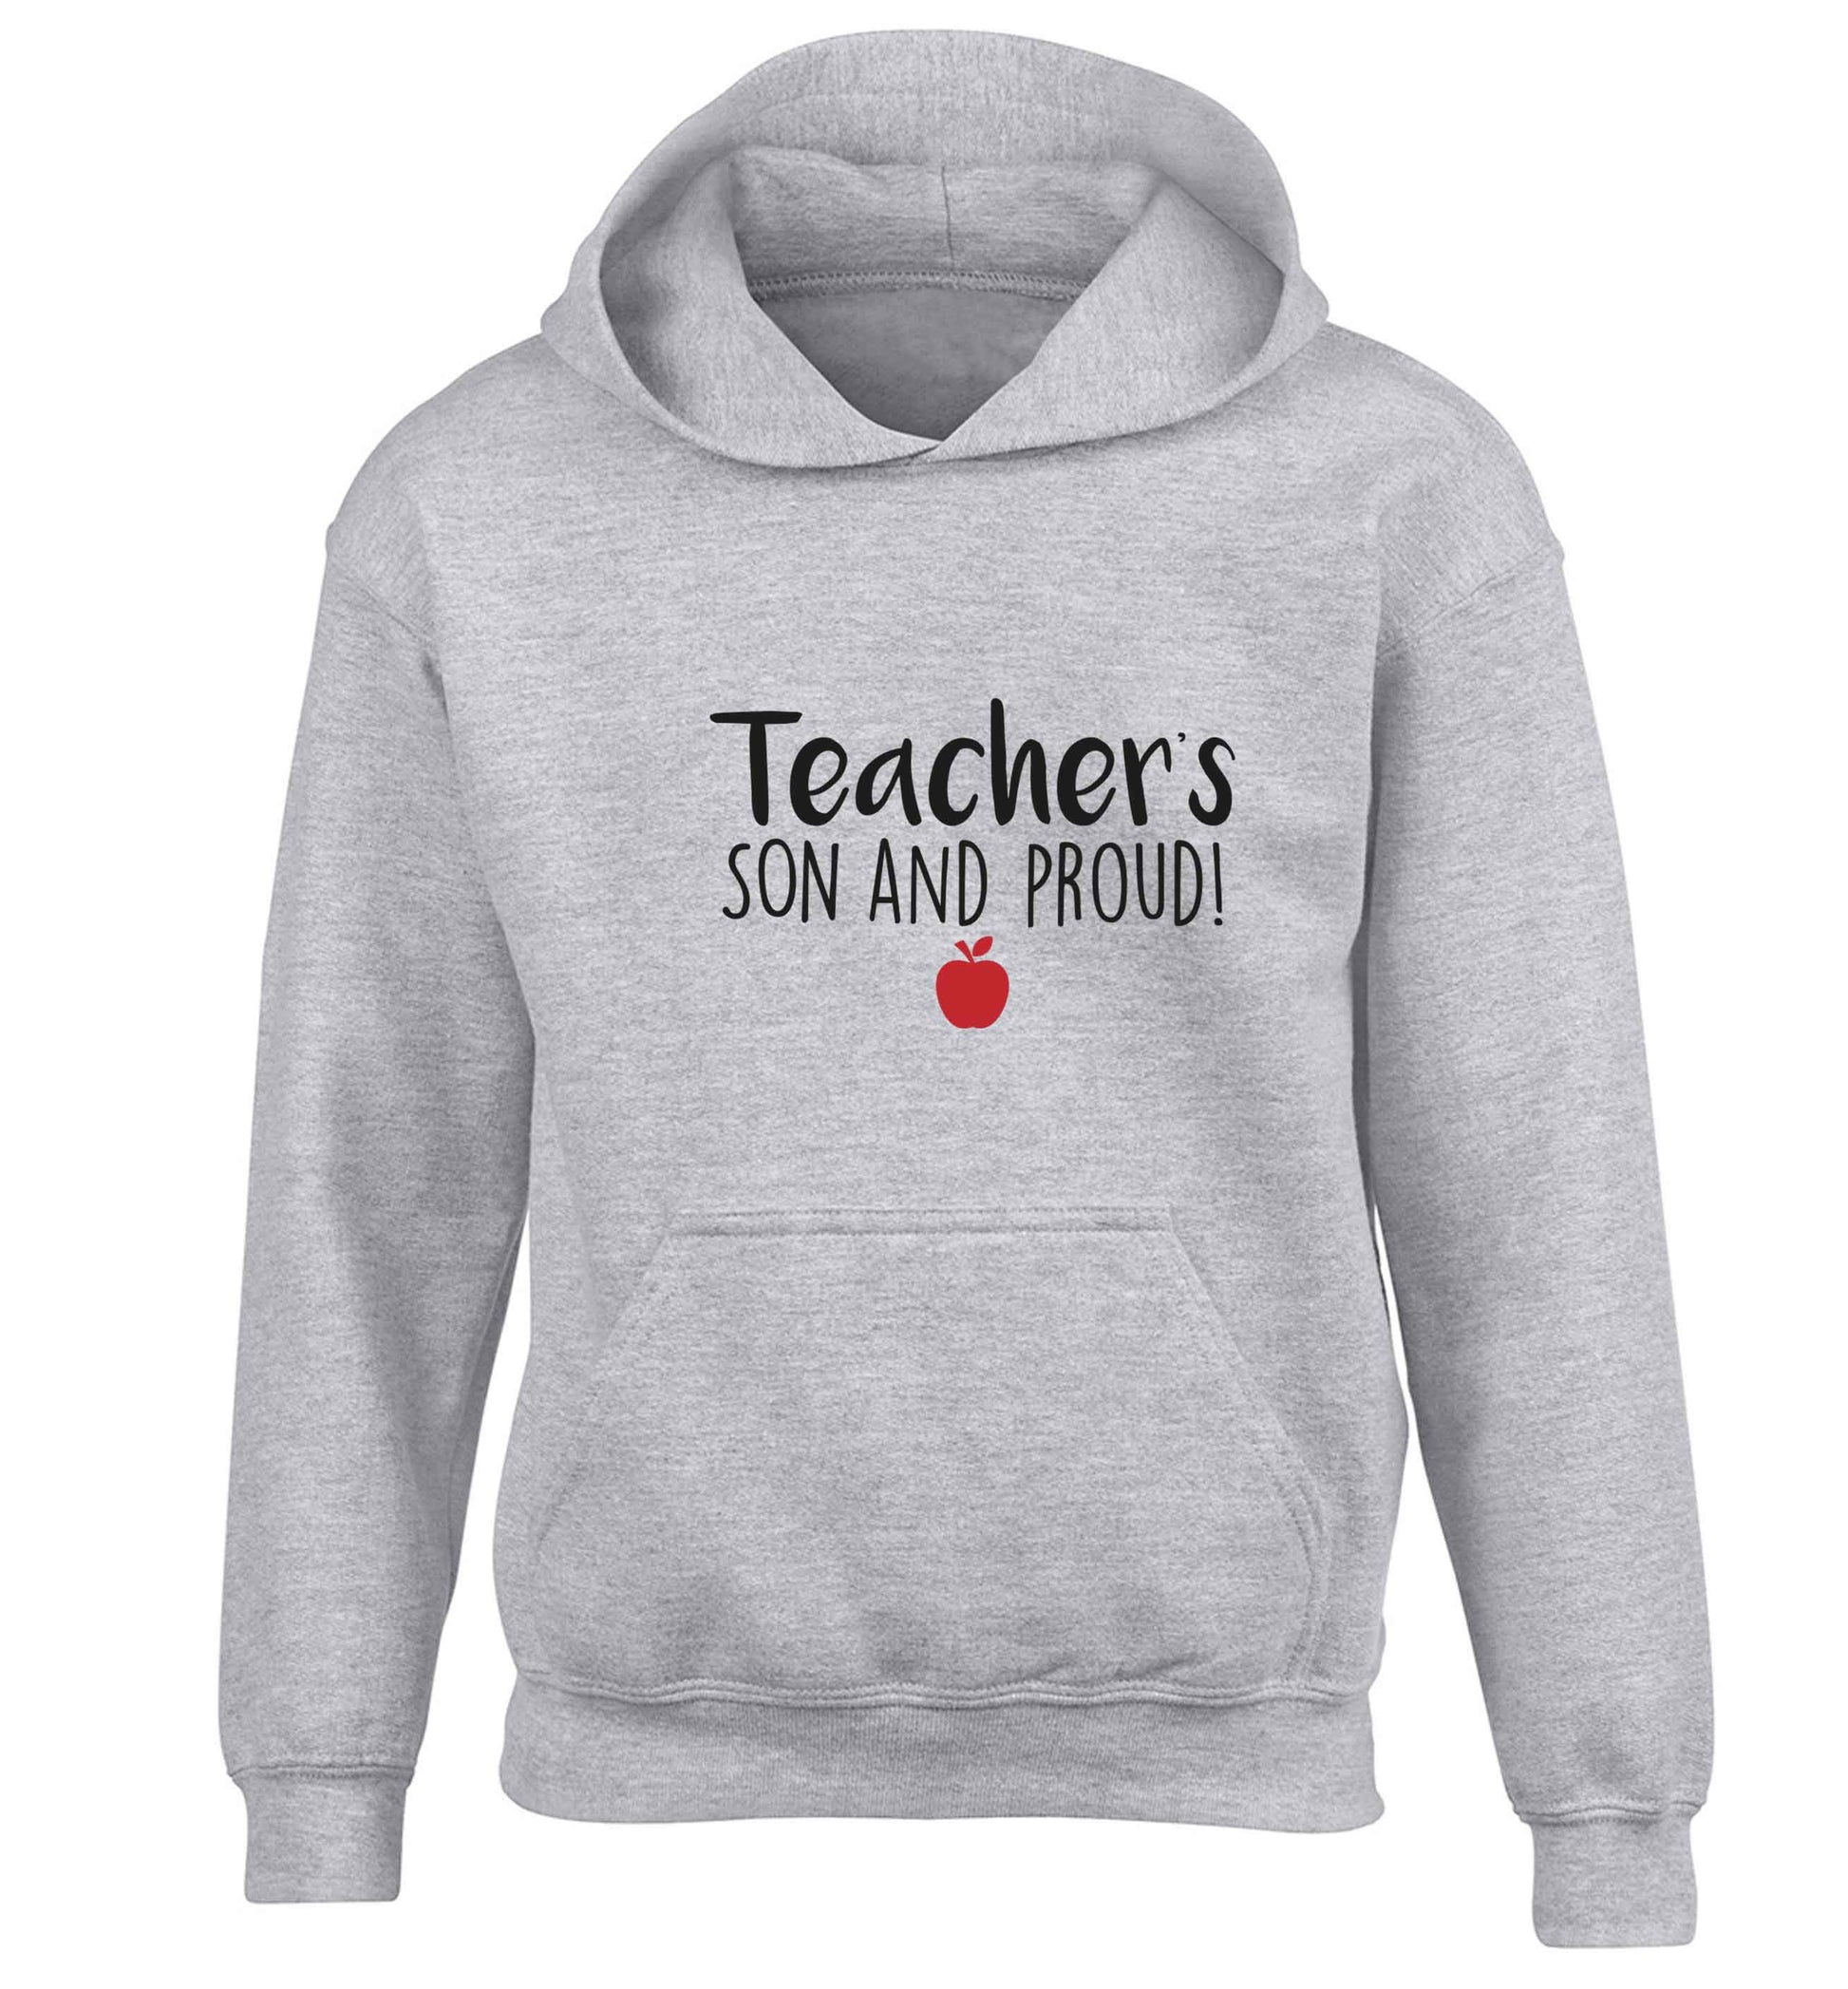 Teachers son and proud children's grey hoodie 12-13 Years